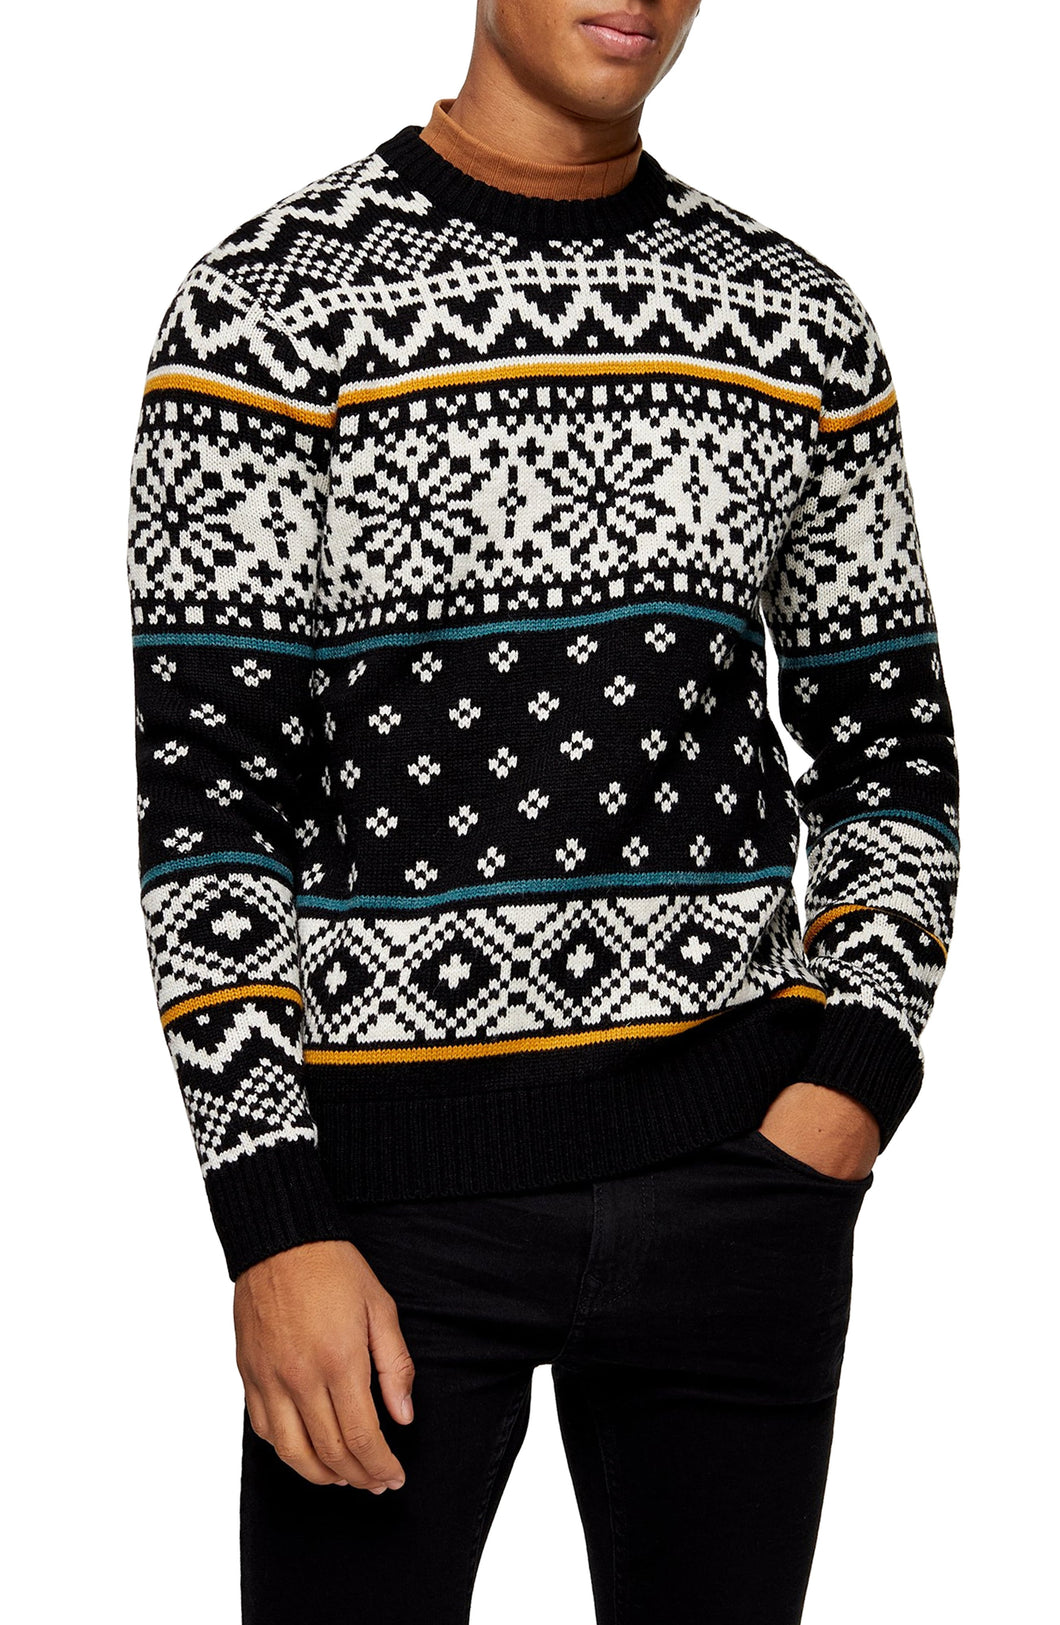 New - Men's Topman Christmas Alpine Fair Isle Crewneck Sweater, Size Small - White